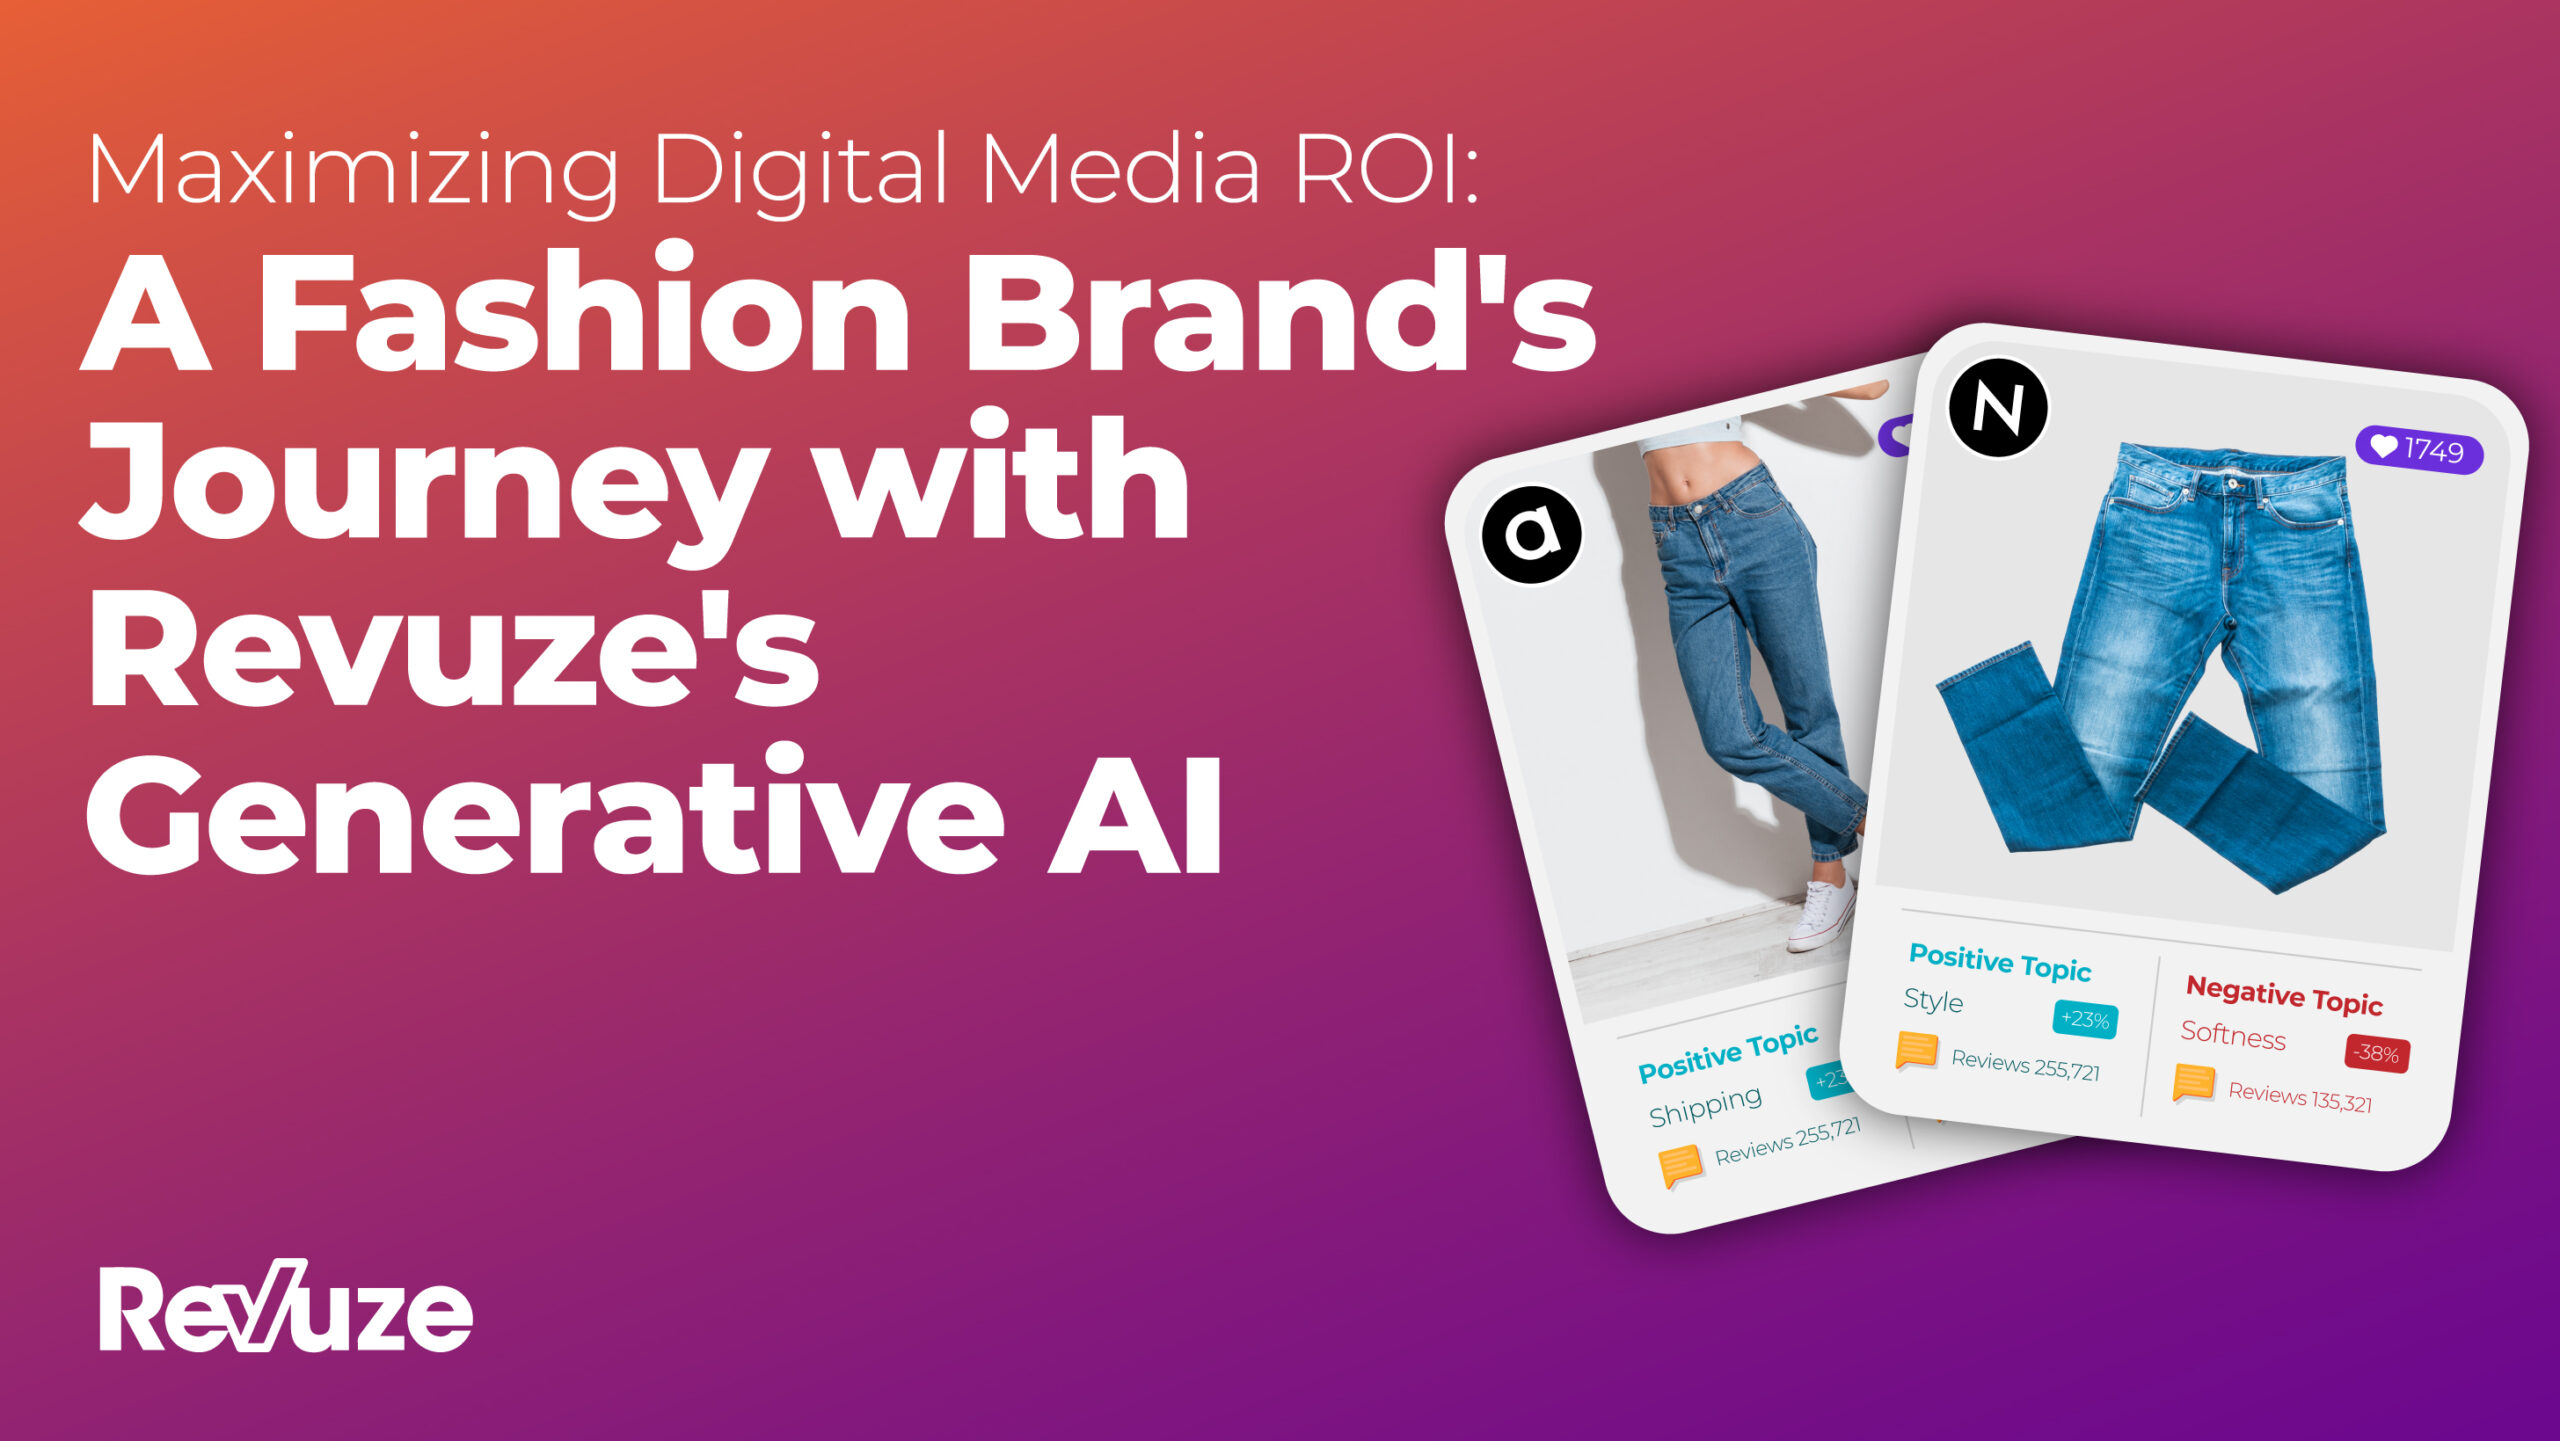 Maximizing Digital Media ROI: A Fashion Brand’s Journey with Revuze’s Generative AI